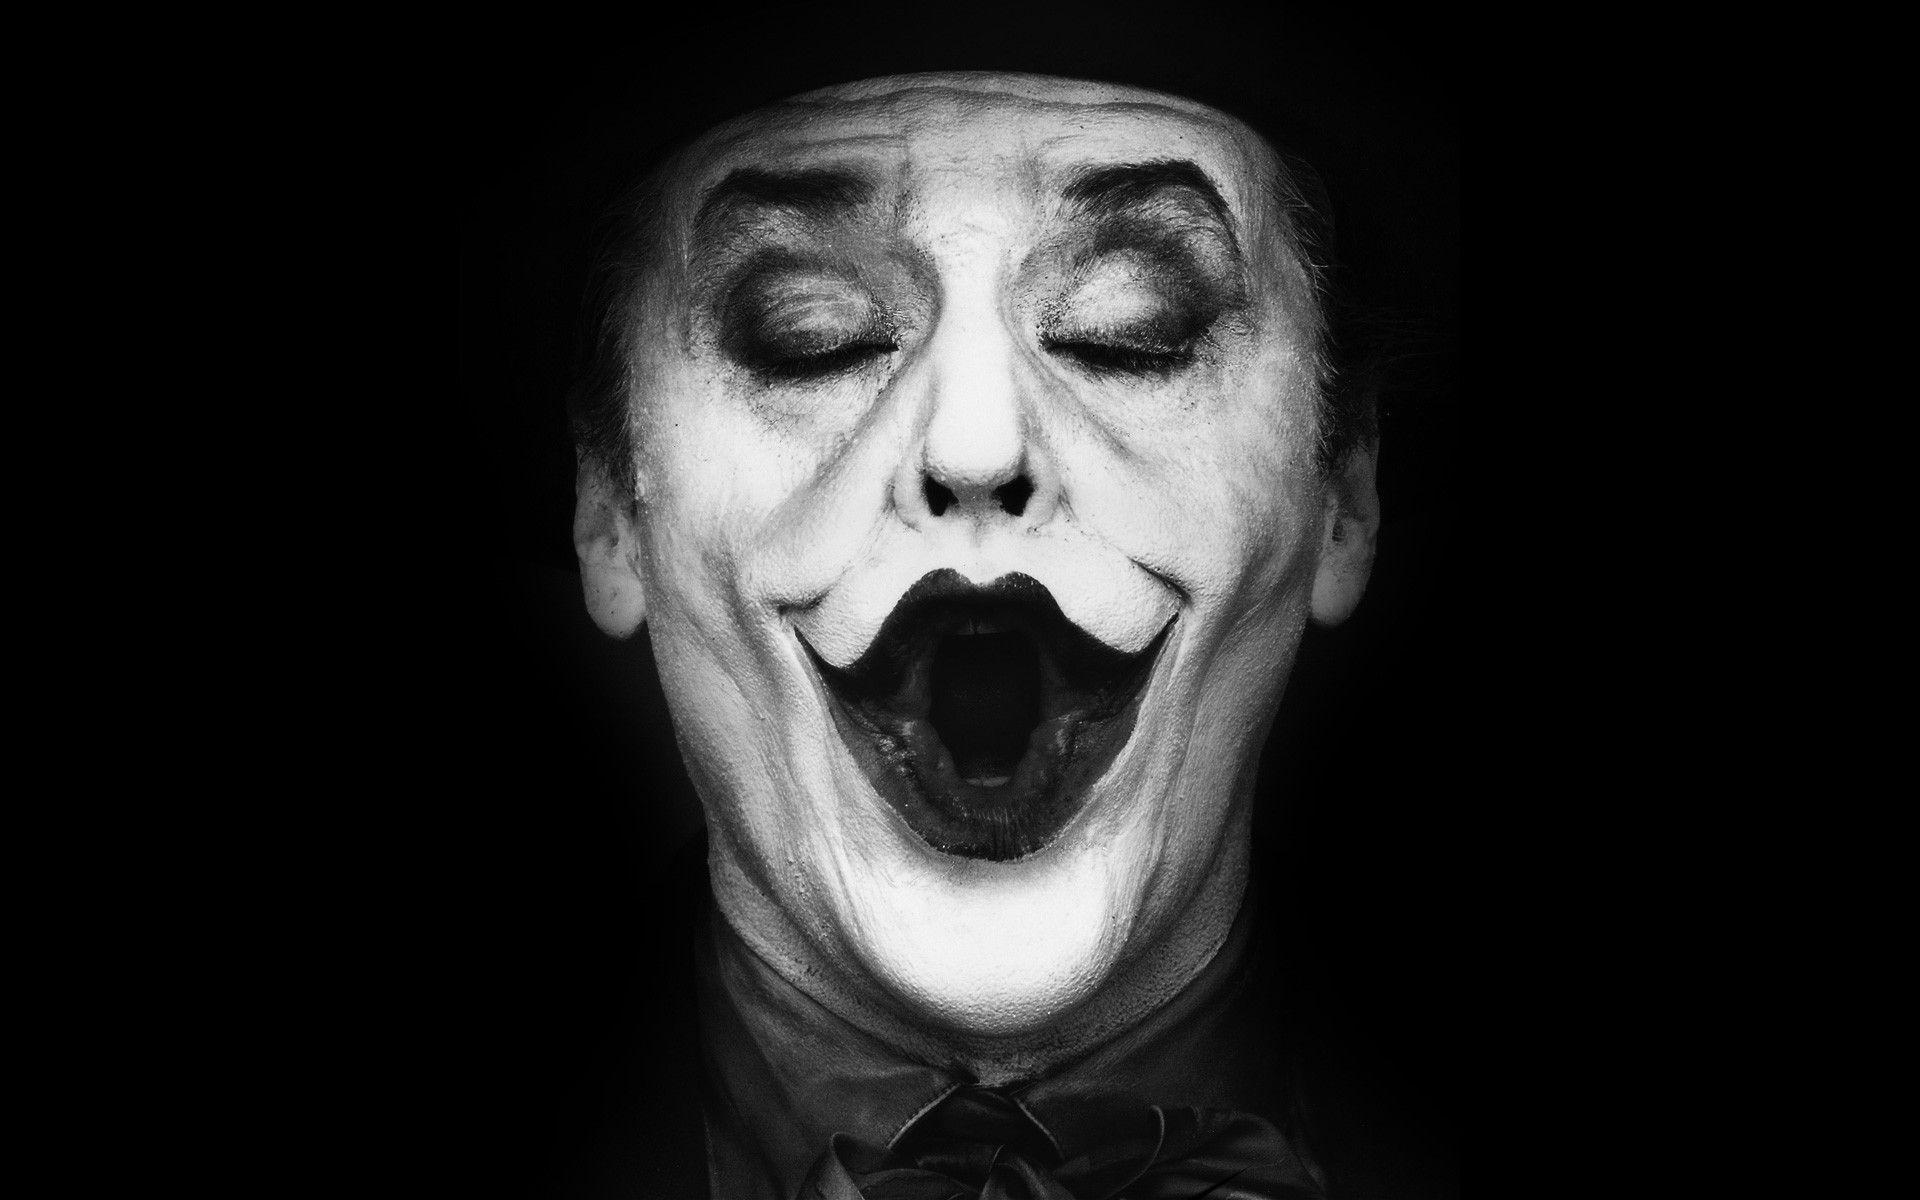 Jack Nicholson Joker Photohoot